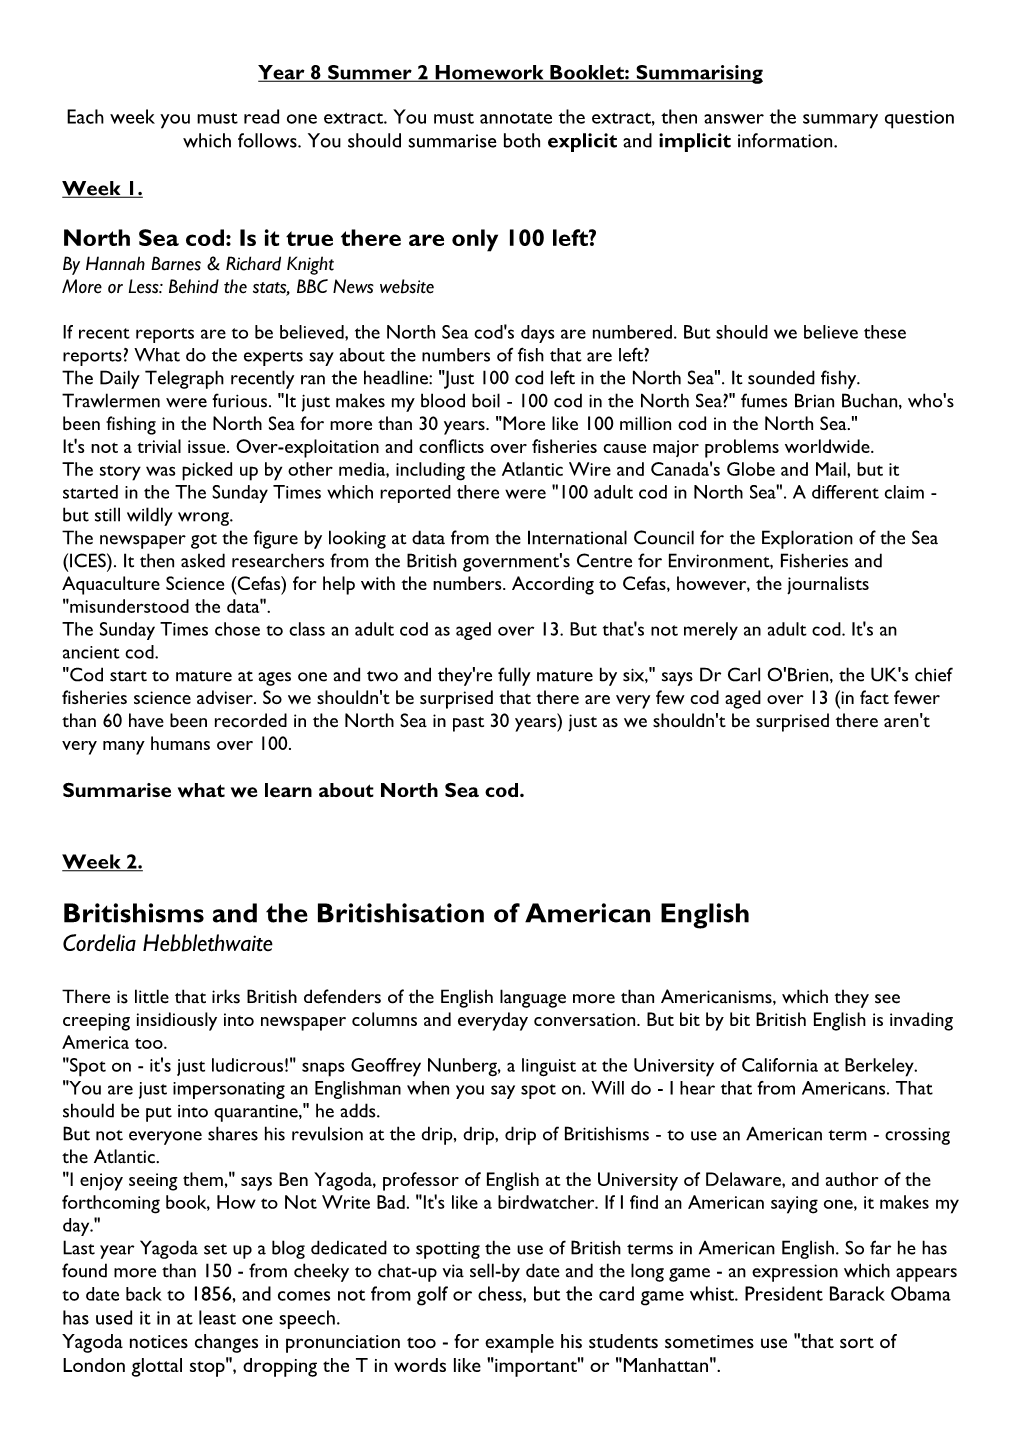 Britishisms and the Britishisation of American English Cordelia Hebblethwaite